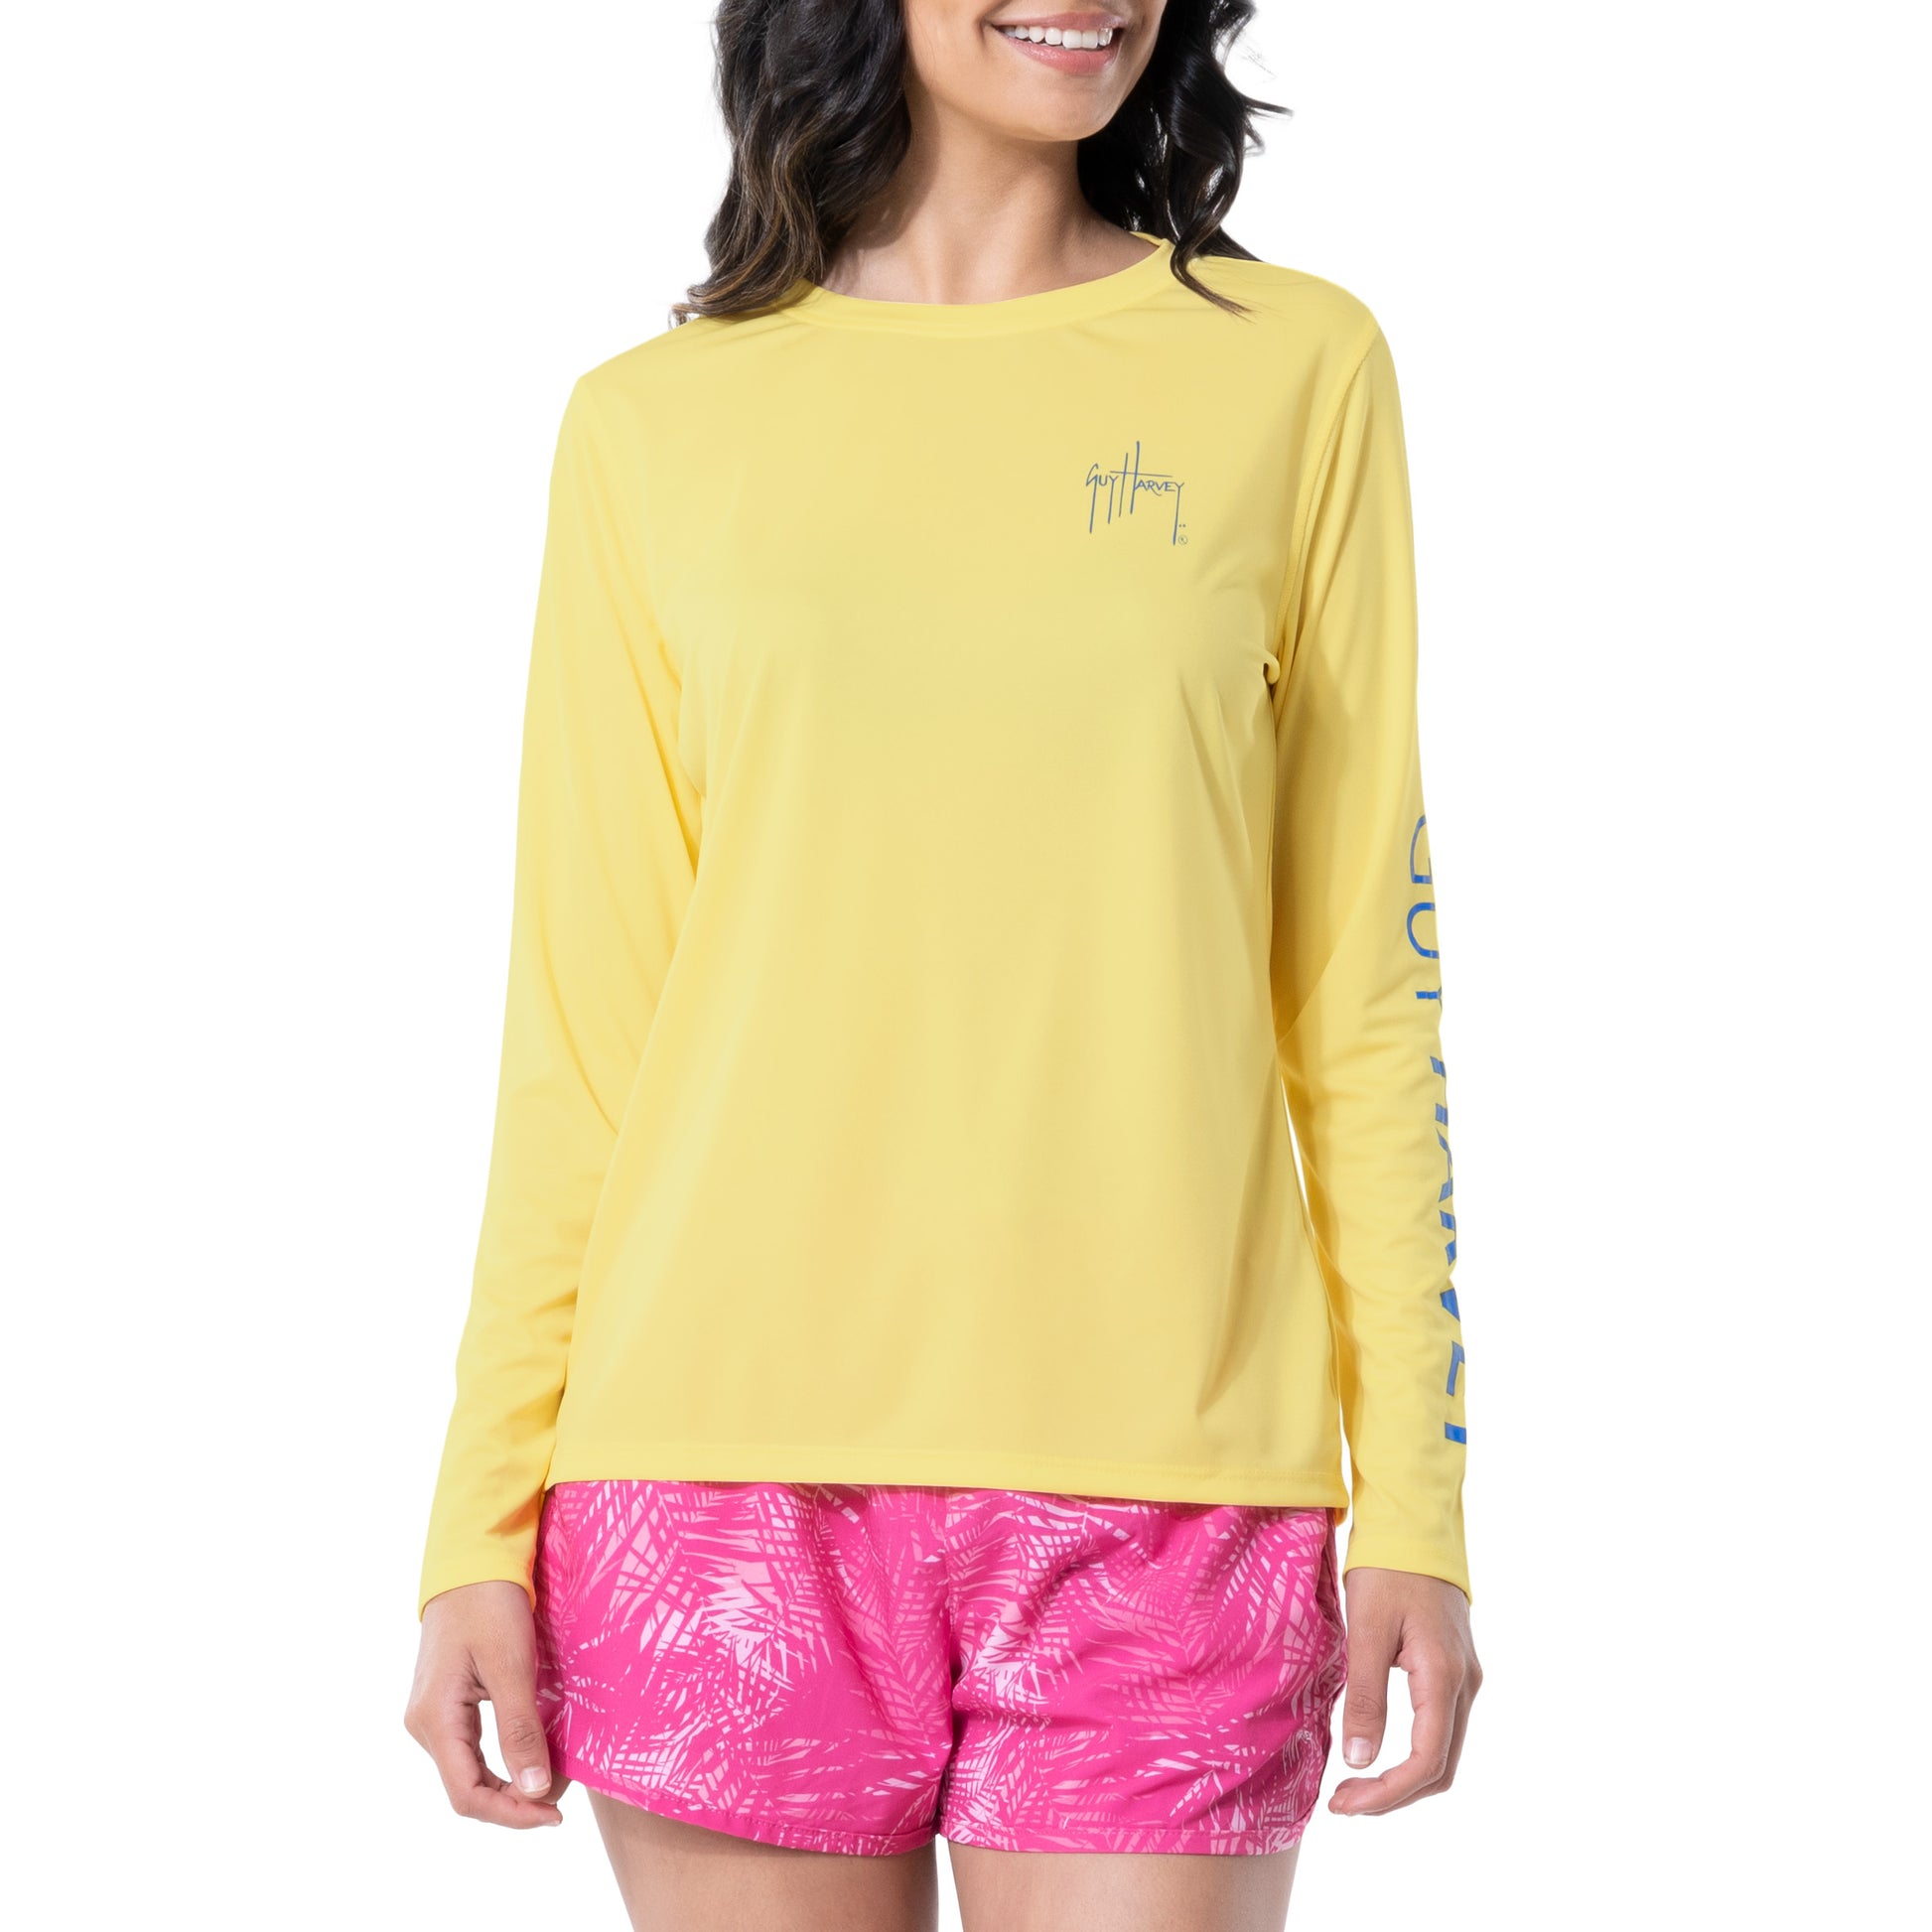 Buy Long Sleeve Fishing T-Shirt for Men and Women, UPF 50 Dri-Fit